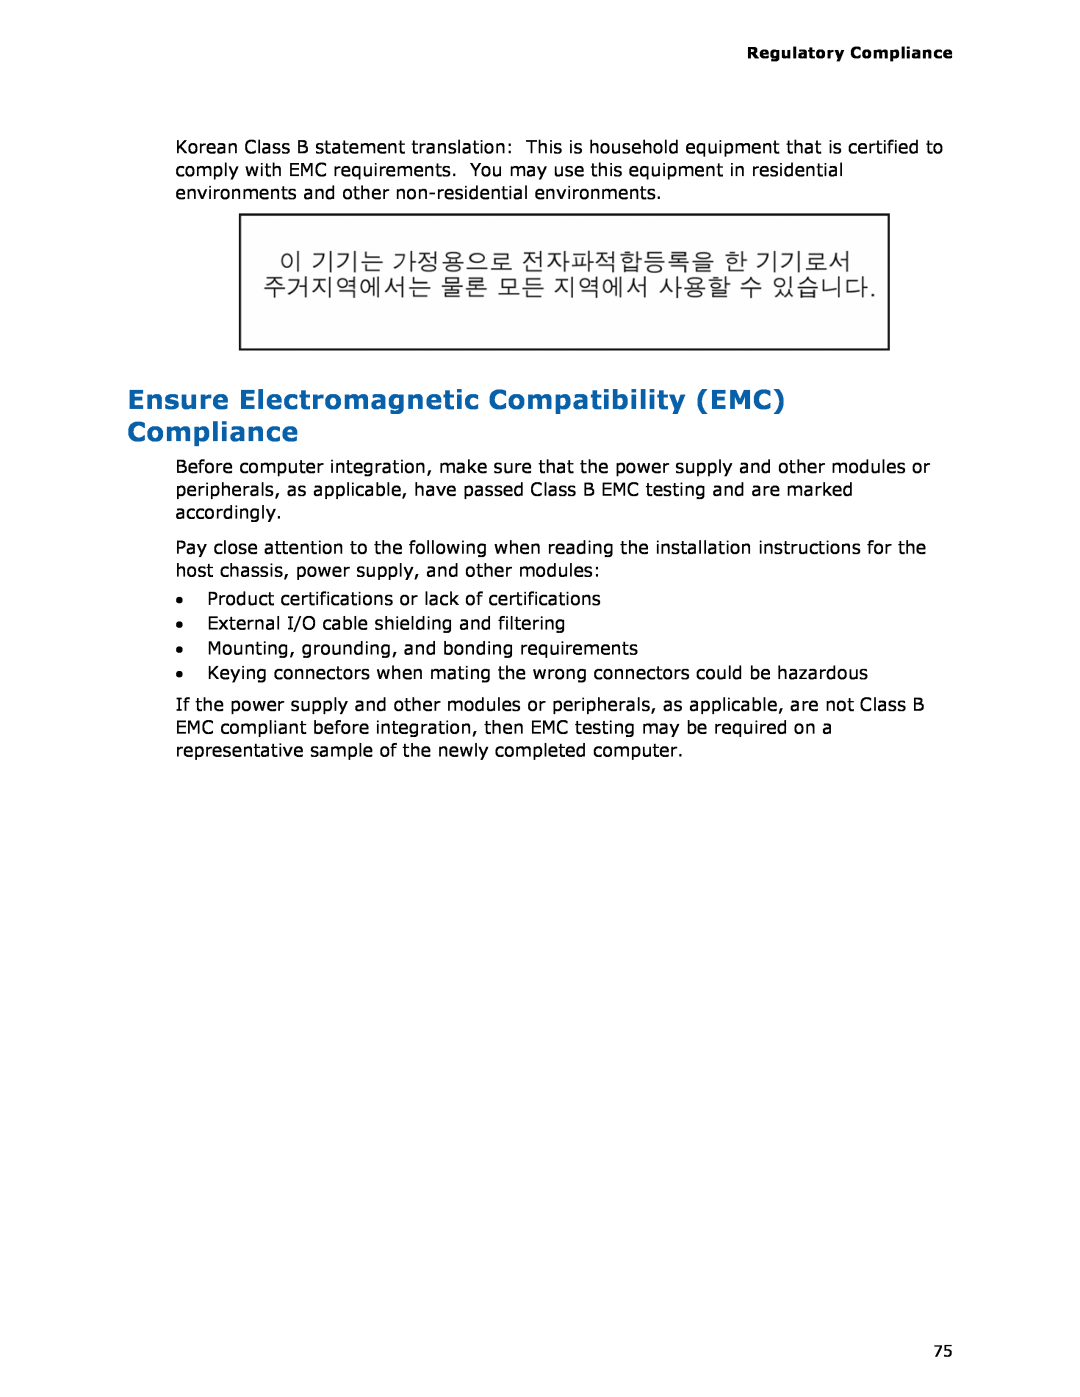 Intel DG35EC, Intel Desktop Board manual Ensure Electromagnetic Compatibility EMC Compliance 